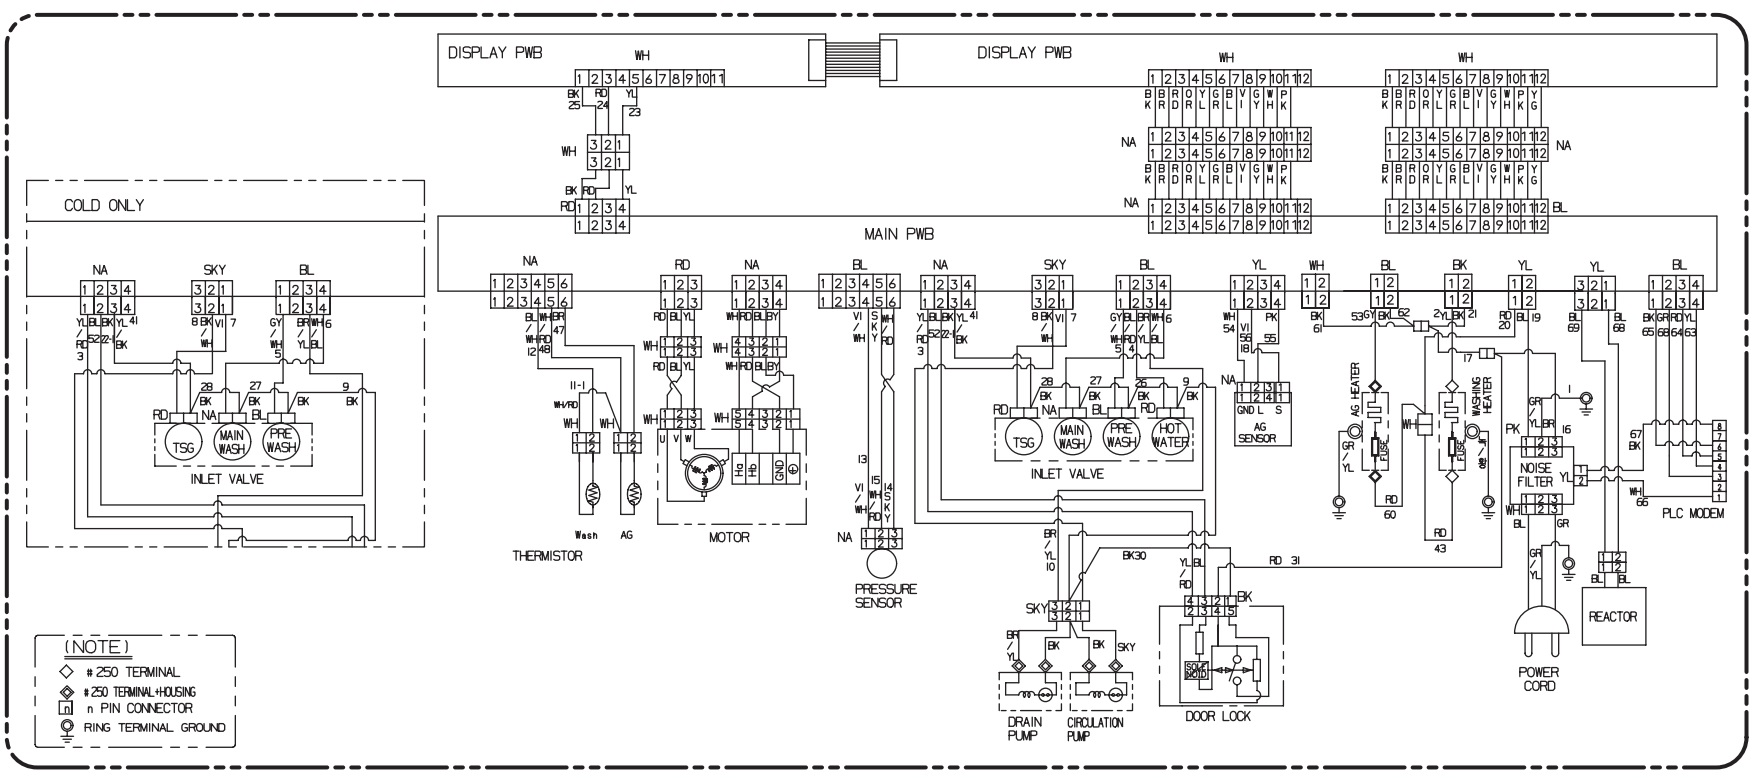 electrotricks: How to disassemble LG WD-1247 BD washing machine